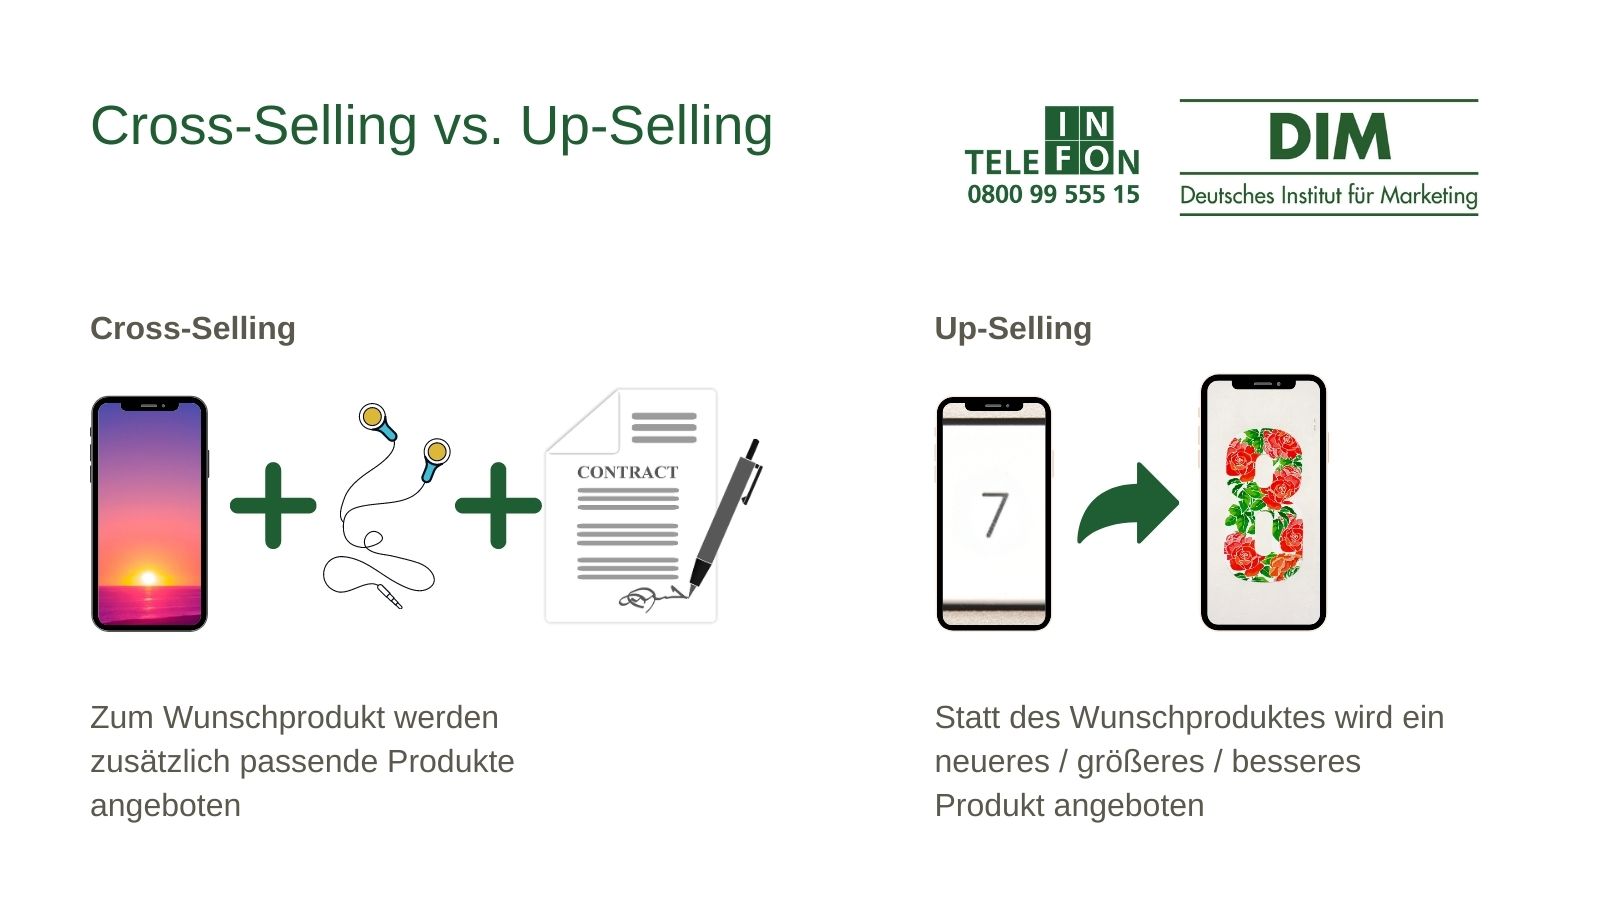 Cross-Selling vs Up-Selling